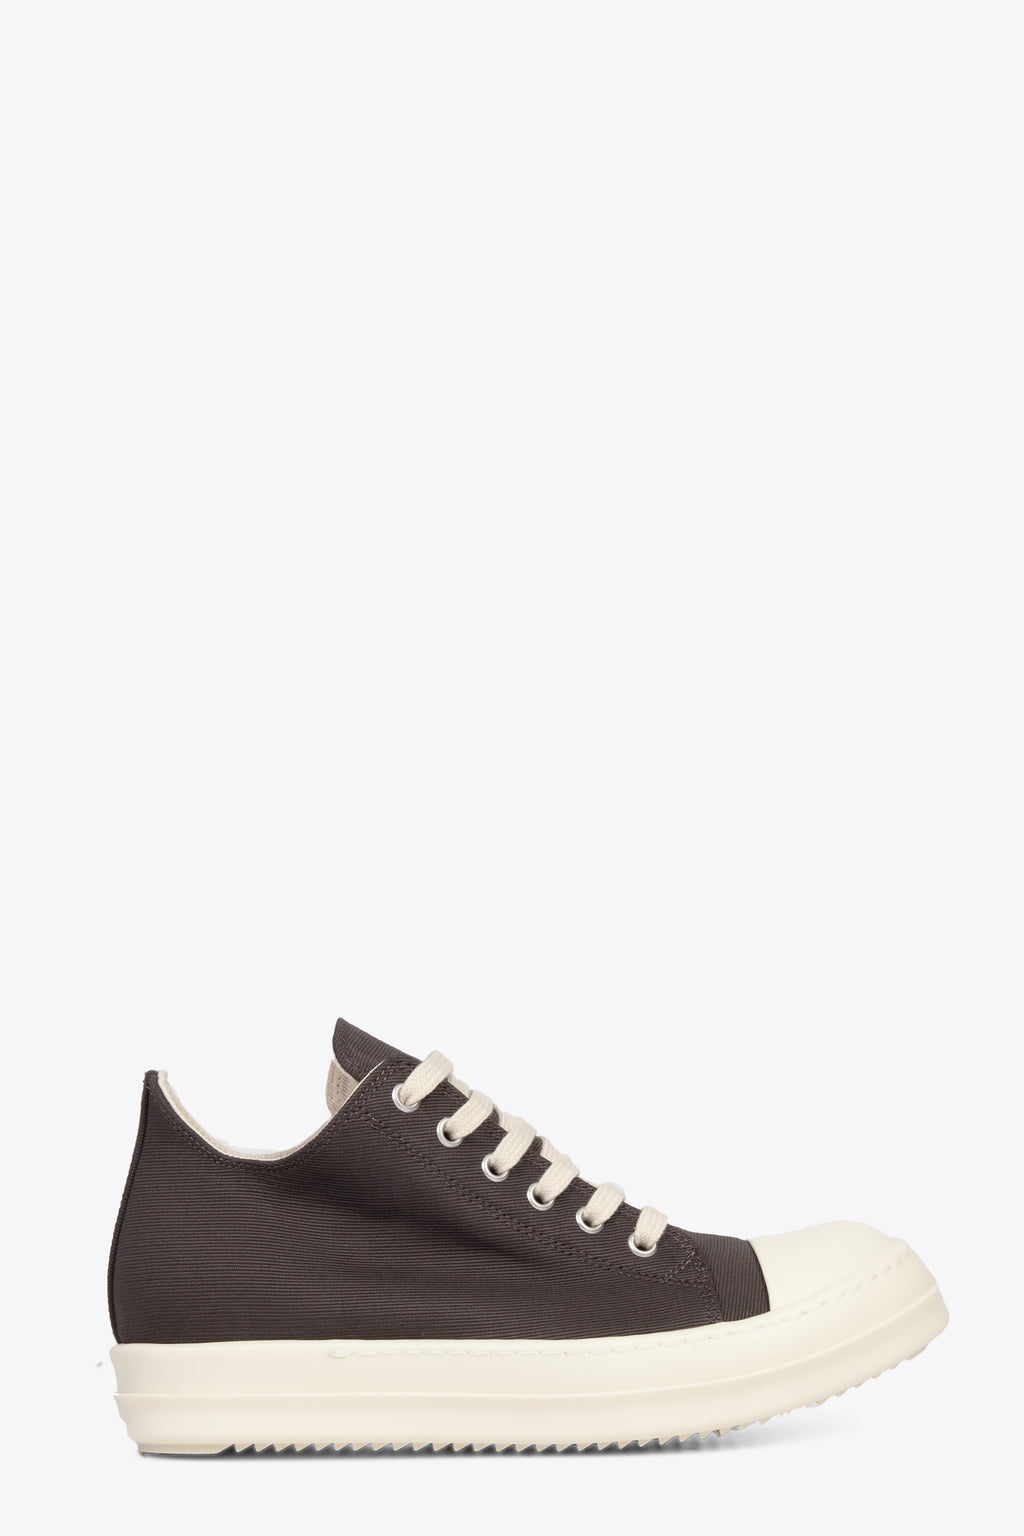 alt-image__Charcoal-grey-cotton-lace-up-low-sneaker---Low-sneaks